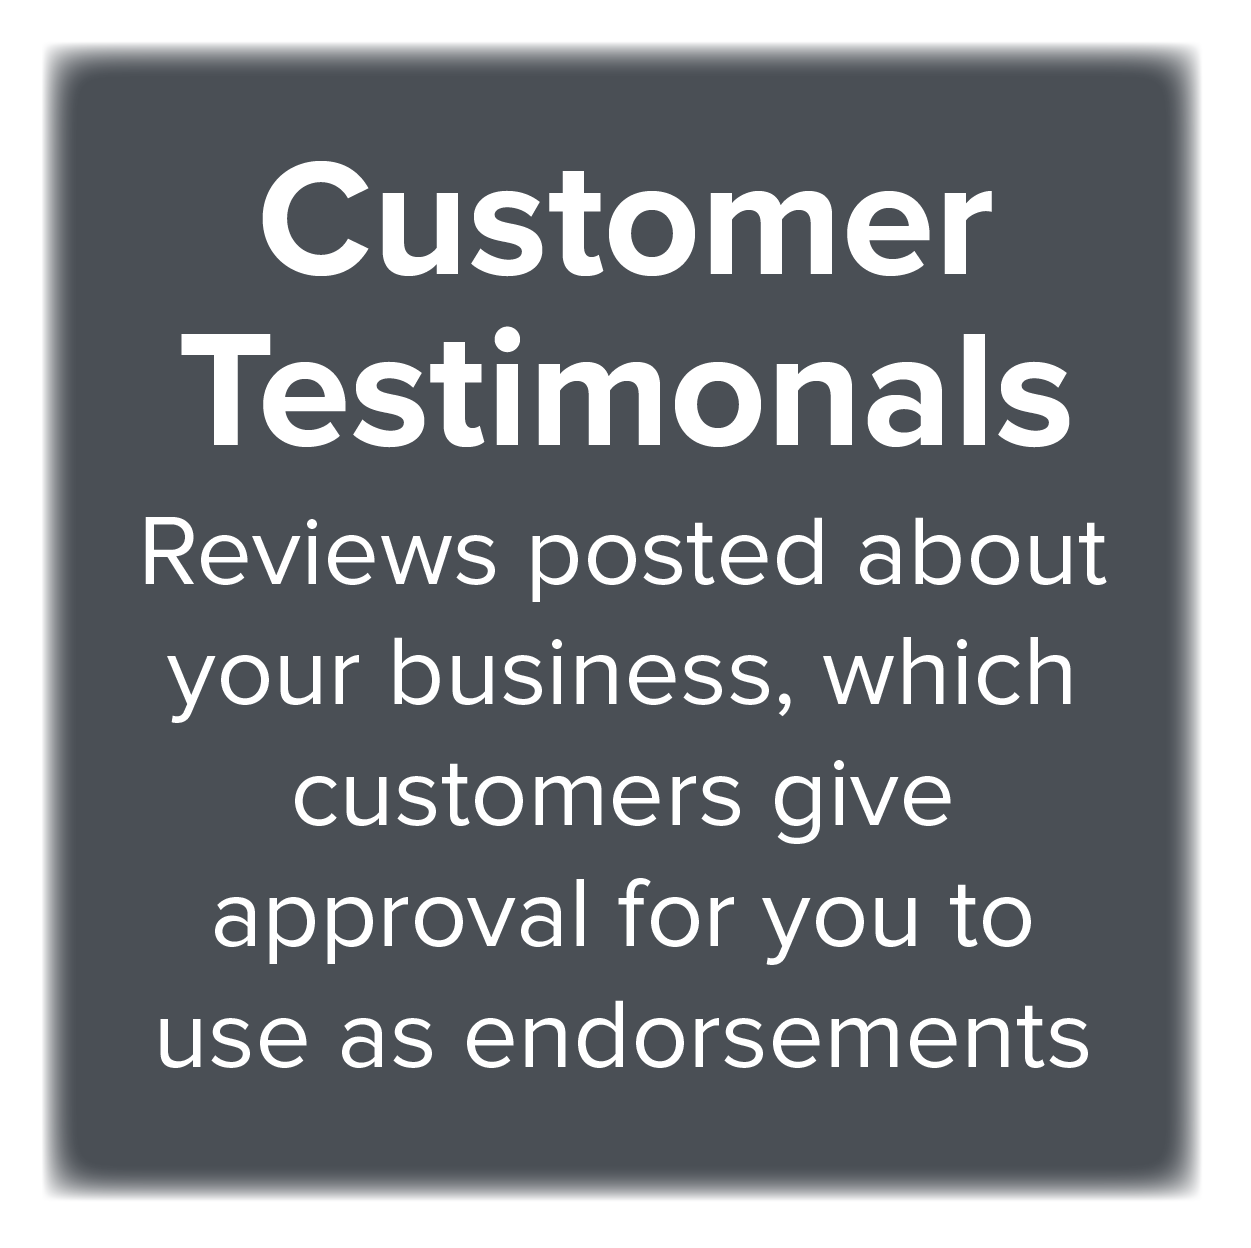 Customer Testimonials defined